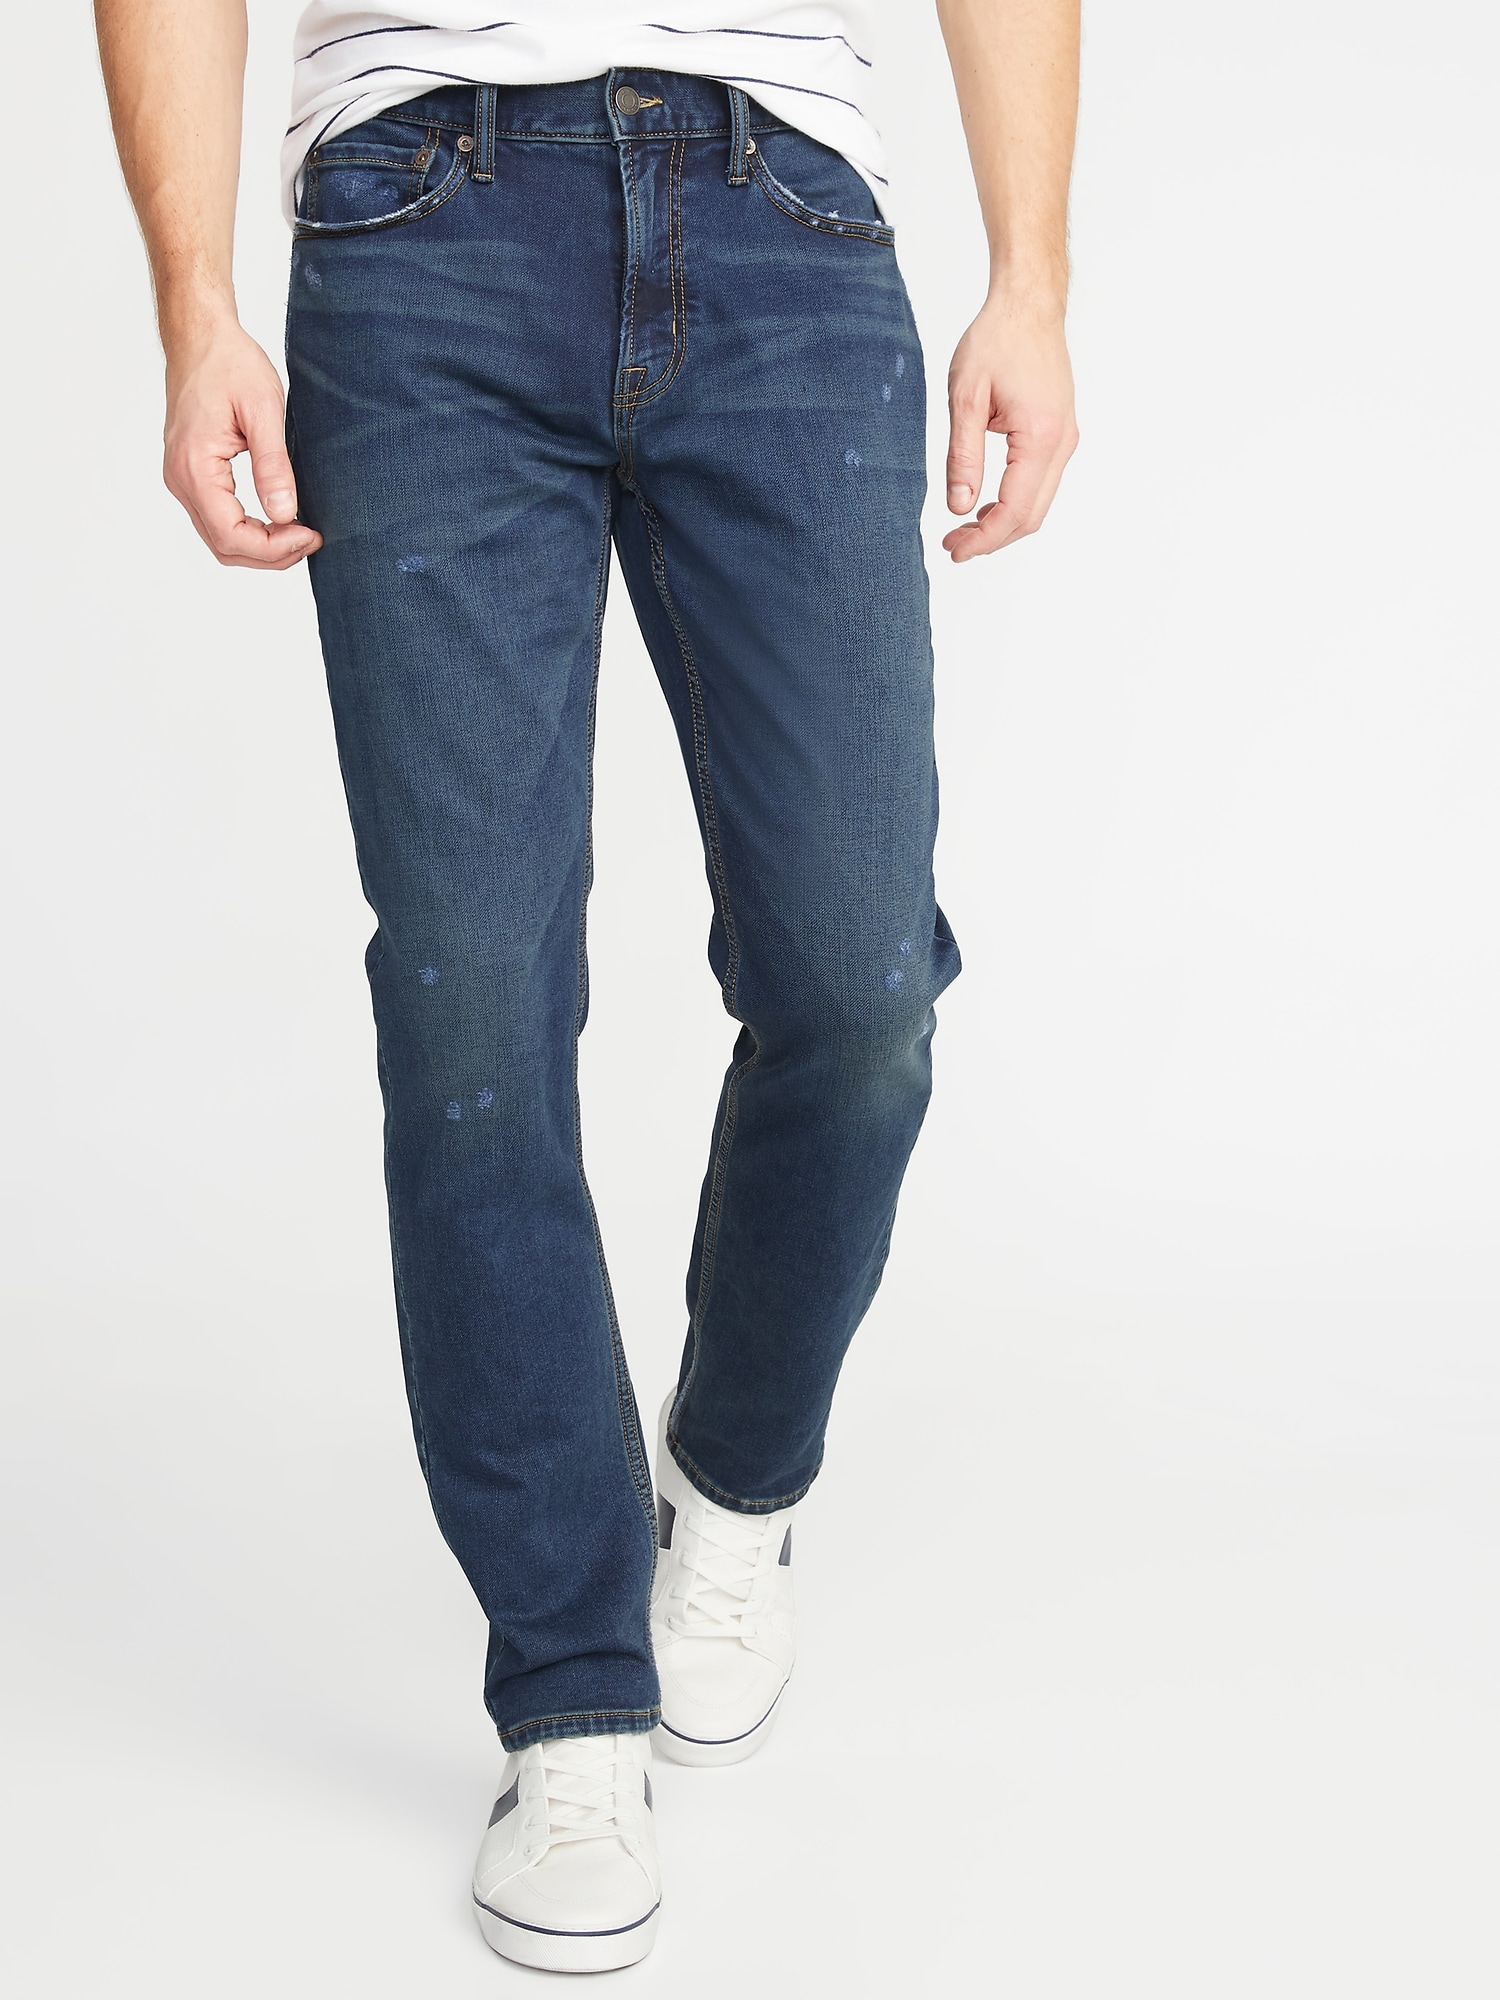 old navy slimming jeans